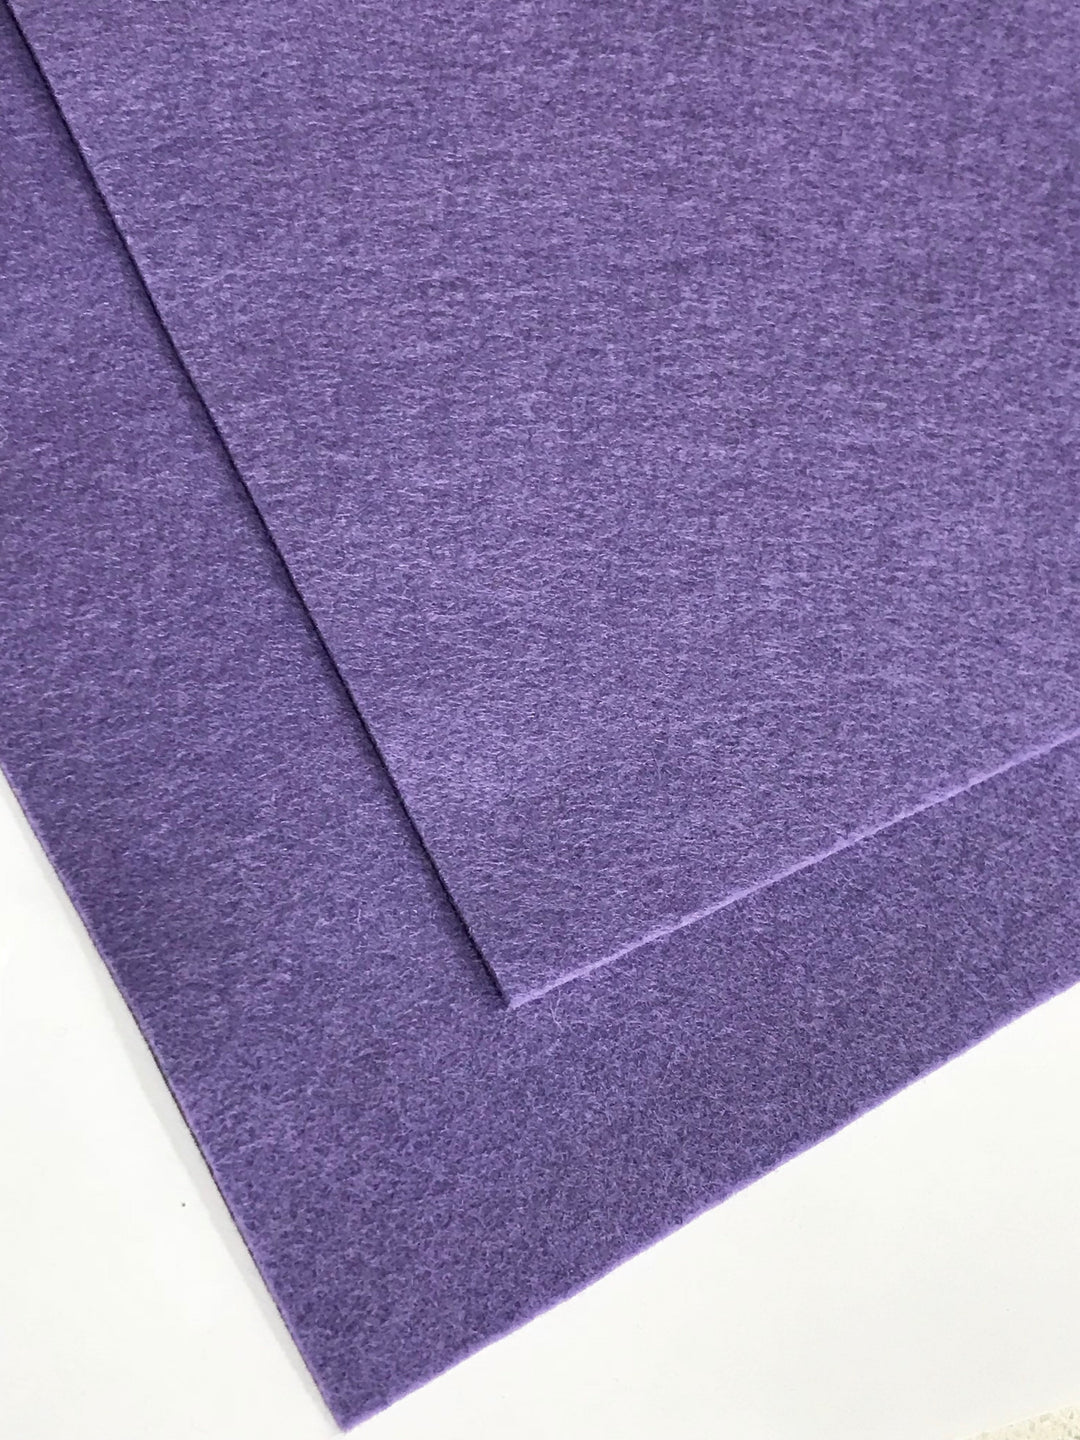 1mm Heather Purple Merino Wool Felt 8 x 11"  Sheet - No. 62